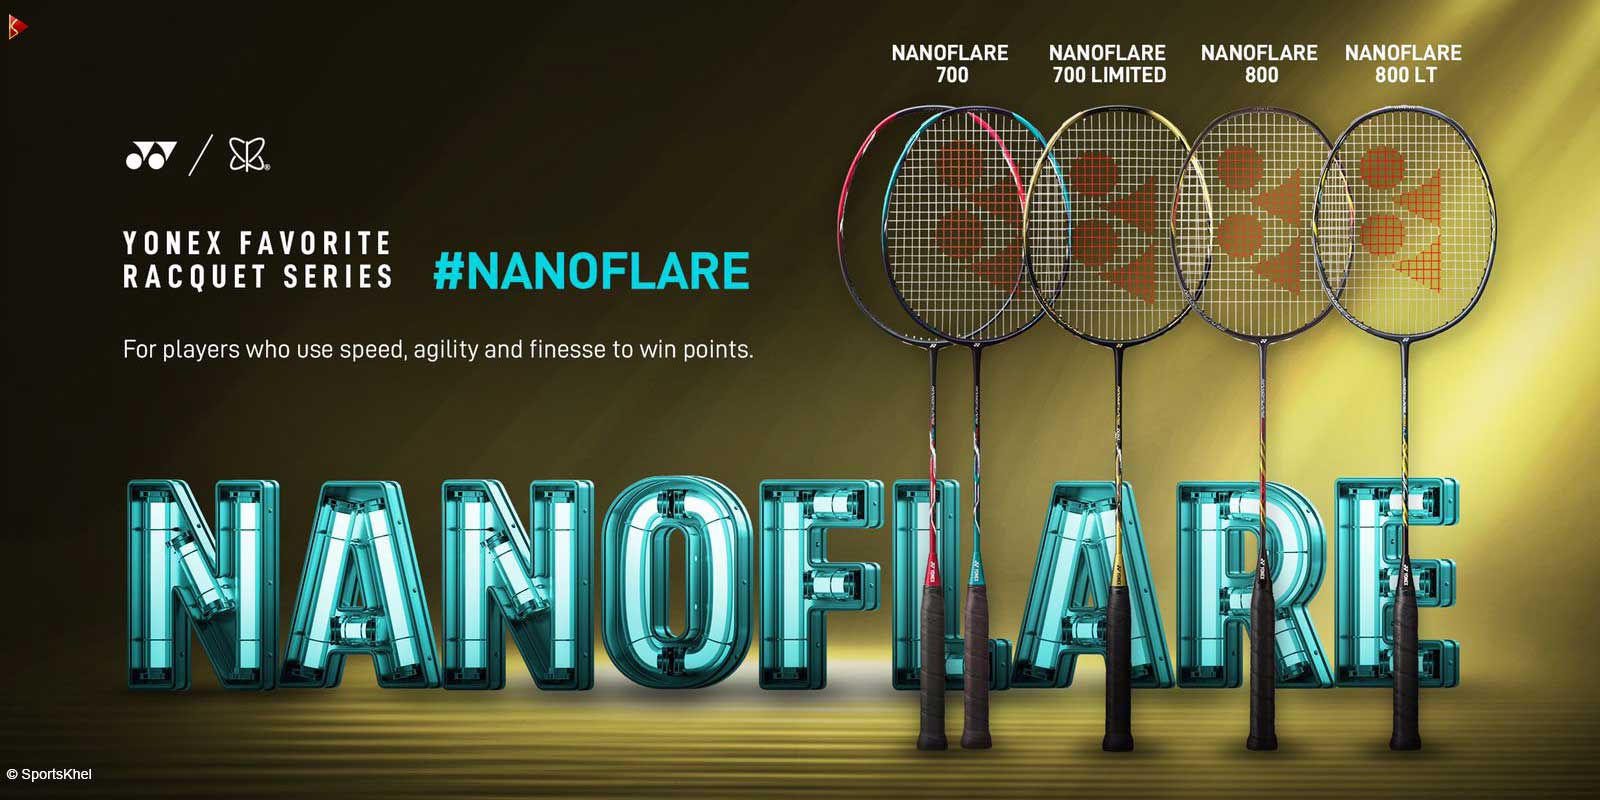 Yonex Nanoflare 800 Badminton Racket Features